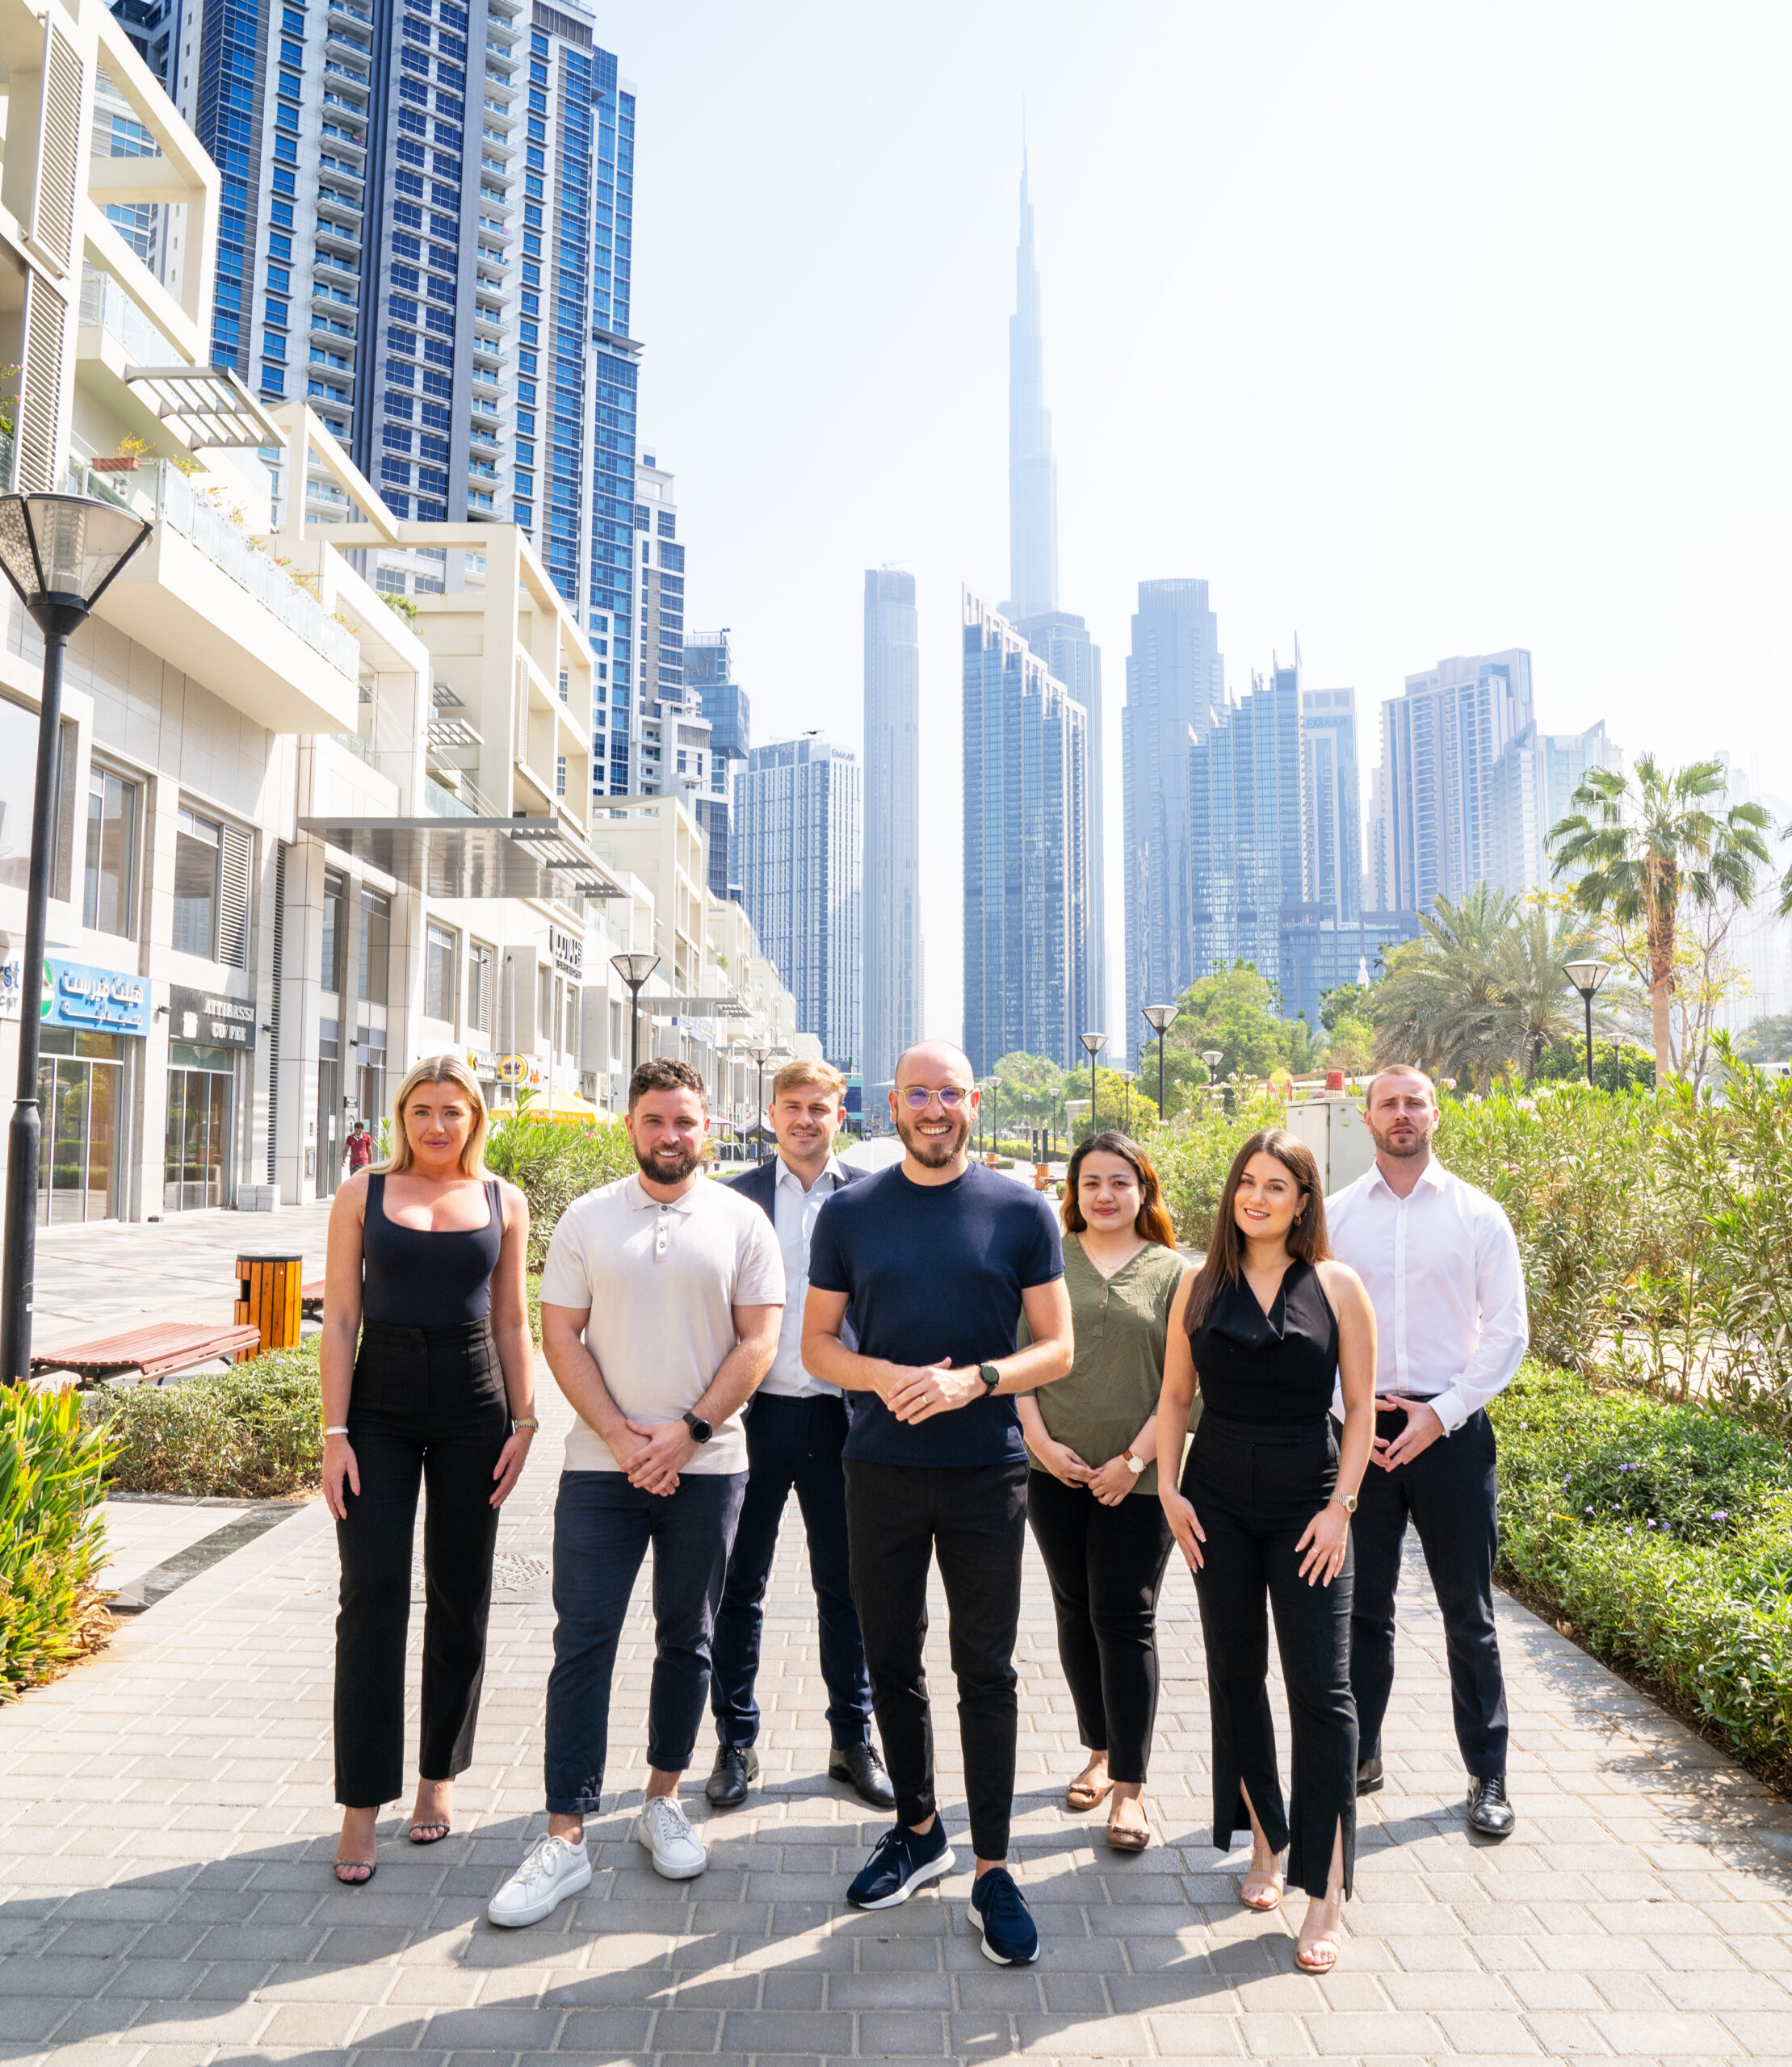 Allsopp & Allsopp is recruiting for jobs in Dubai from Manchester. Credit: Supplied